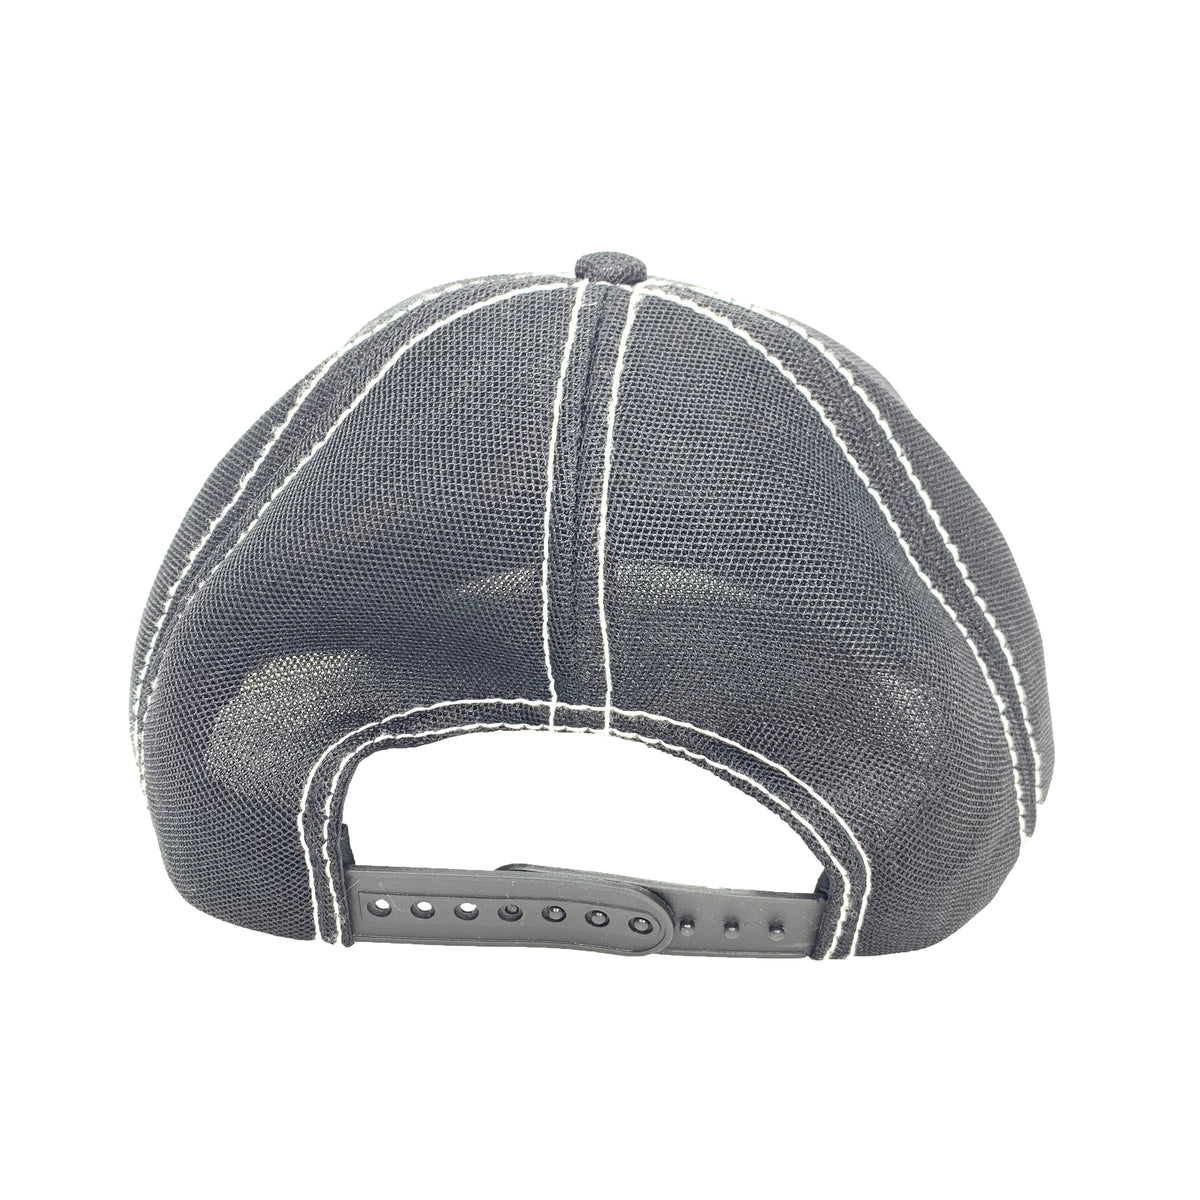 Men's John Deere Hat / Cap (Black / Gray Mesh) - LP68009 